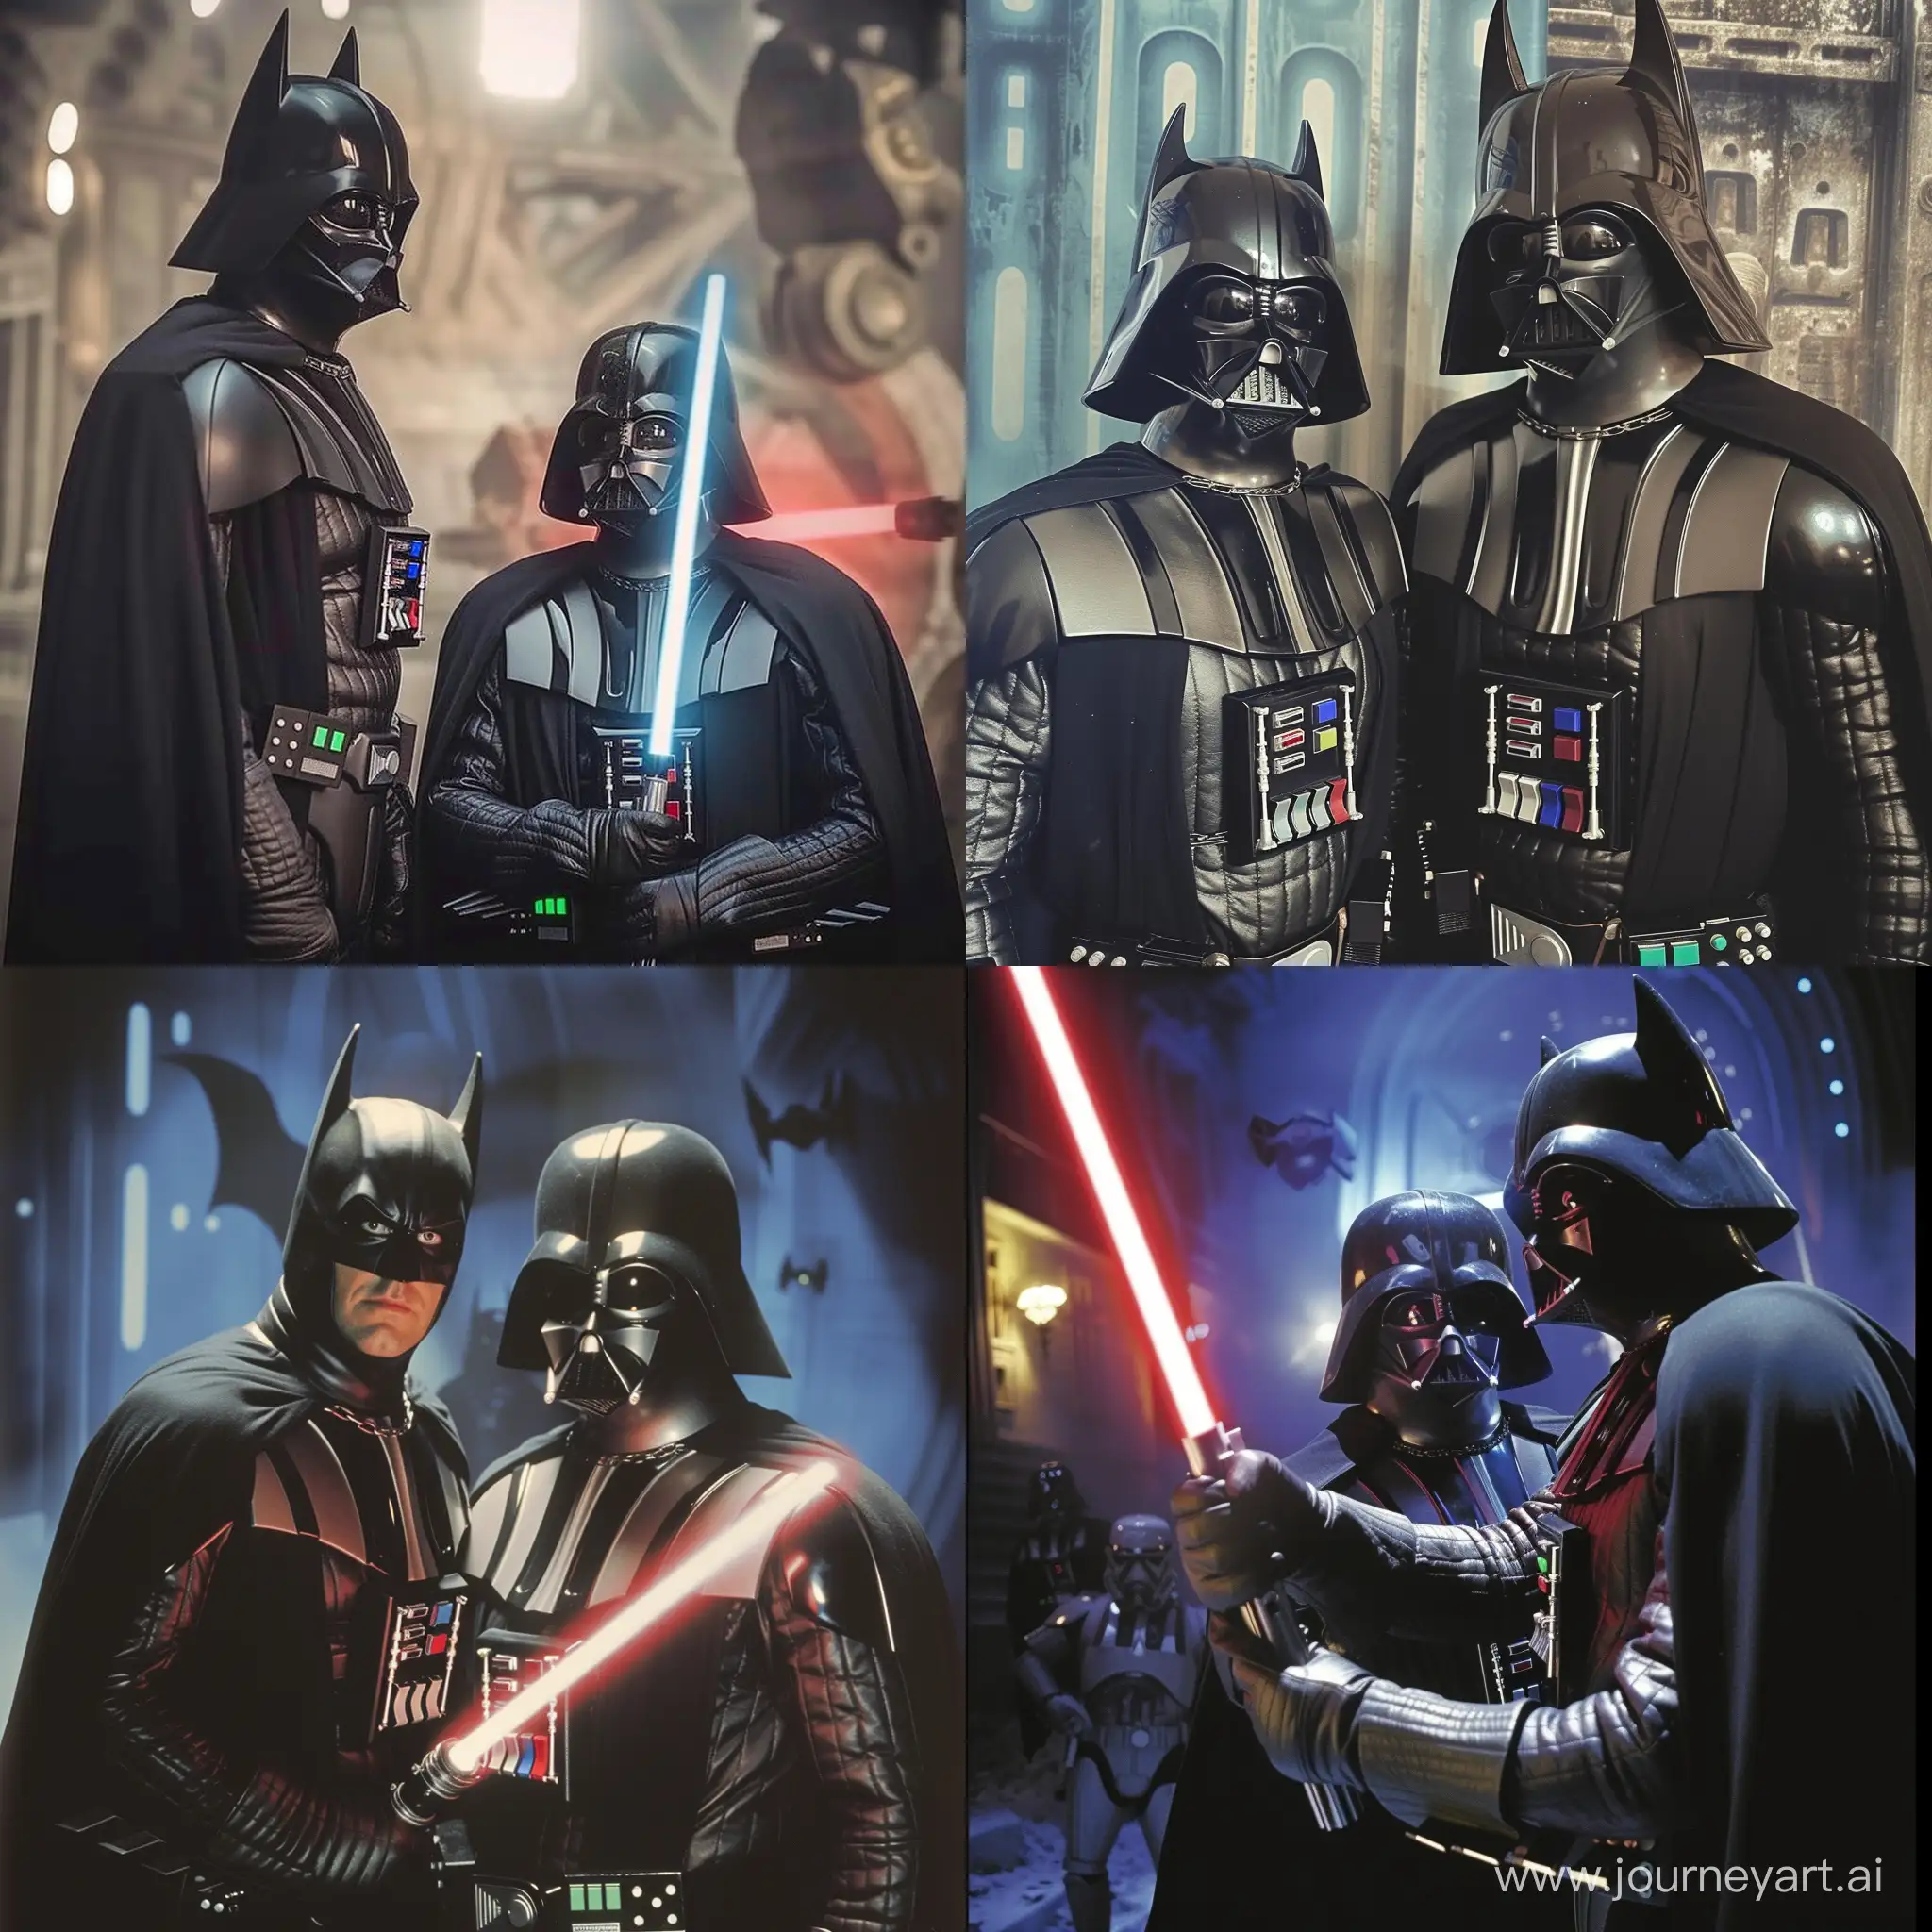 Epic-Showdown-Batman-vs-Darth-Vader-in-Intergalactic-Battle